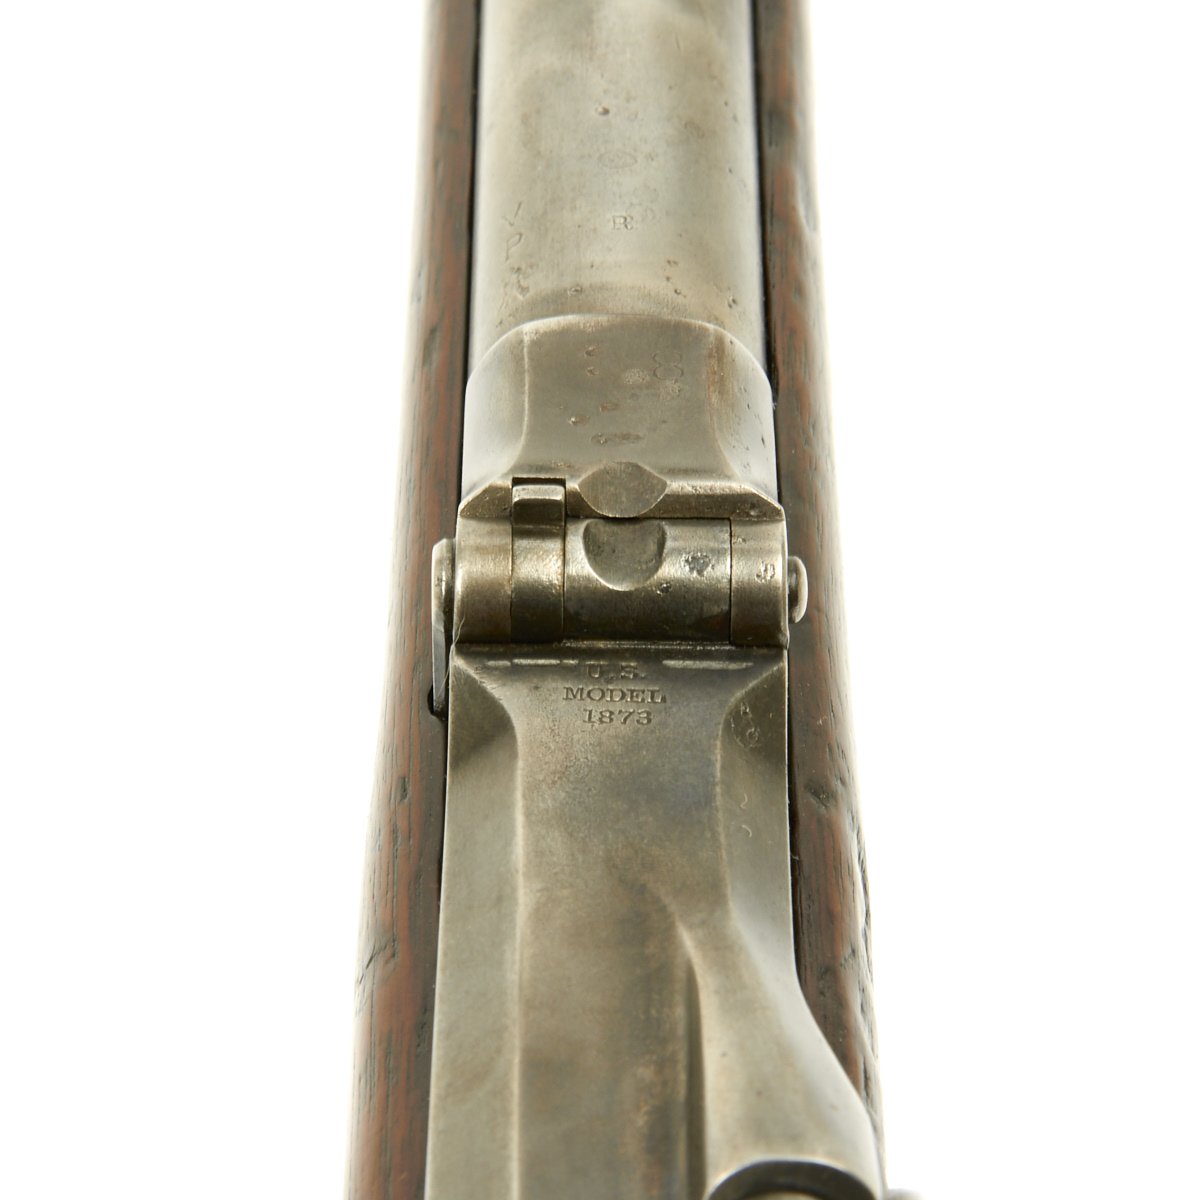 1873 springfield trapdoor serial number 359205